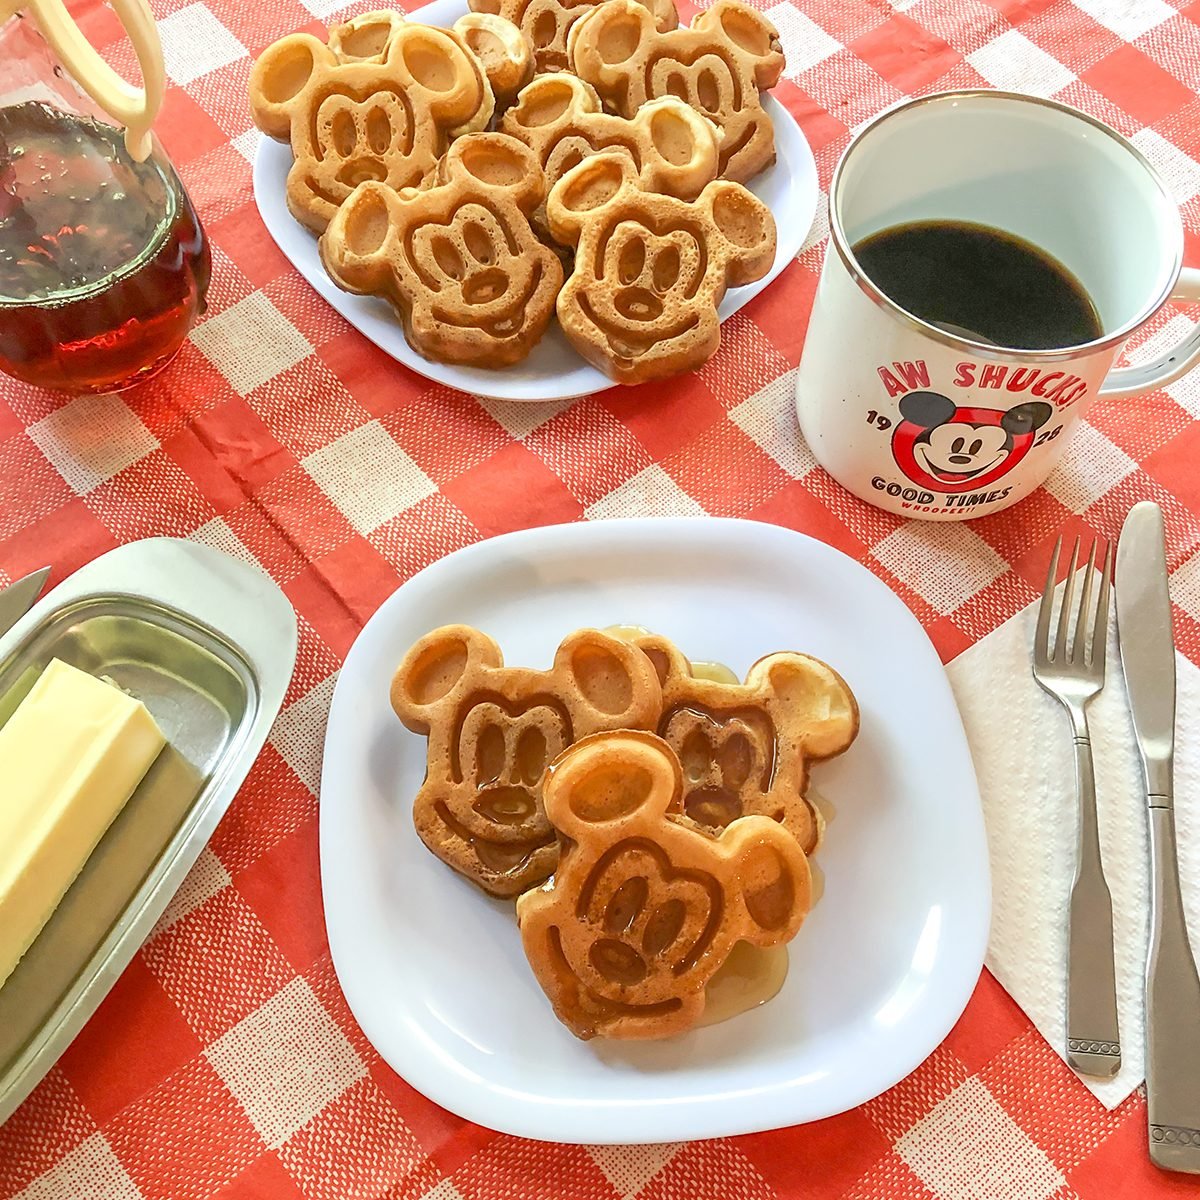 Mickey Mouse MIC-62 Double Flip Waffle Maker Disney